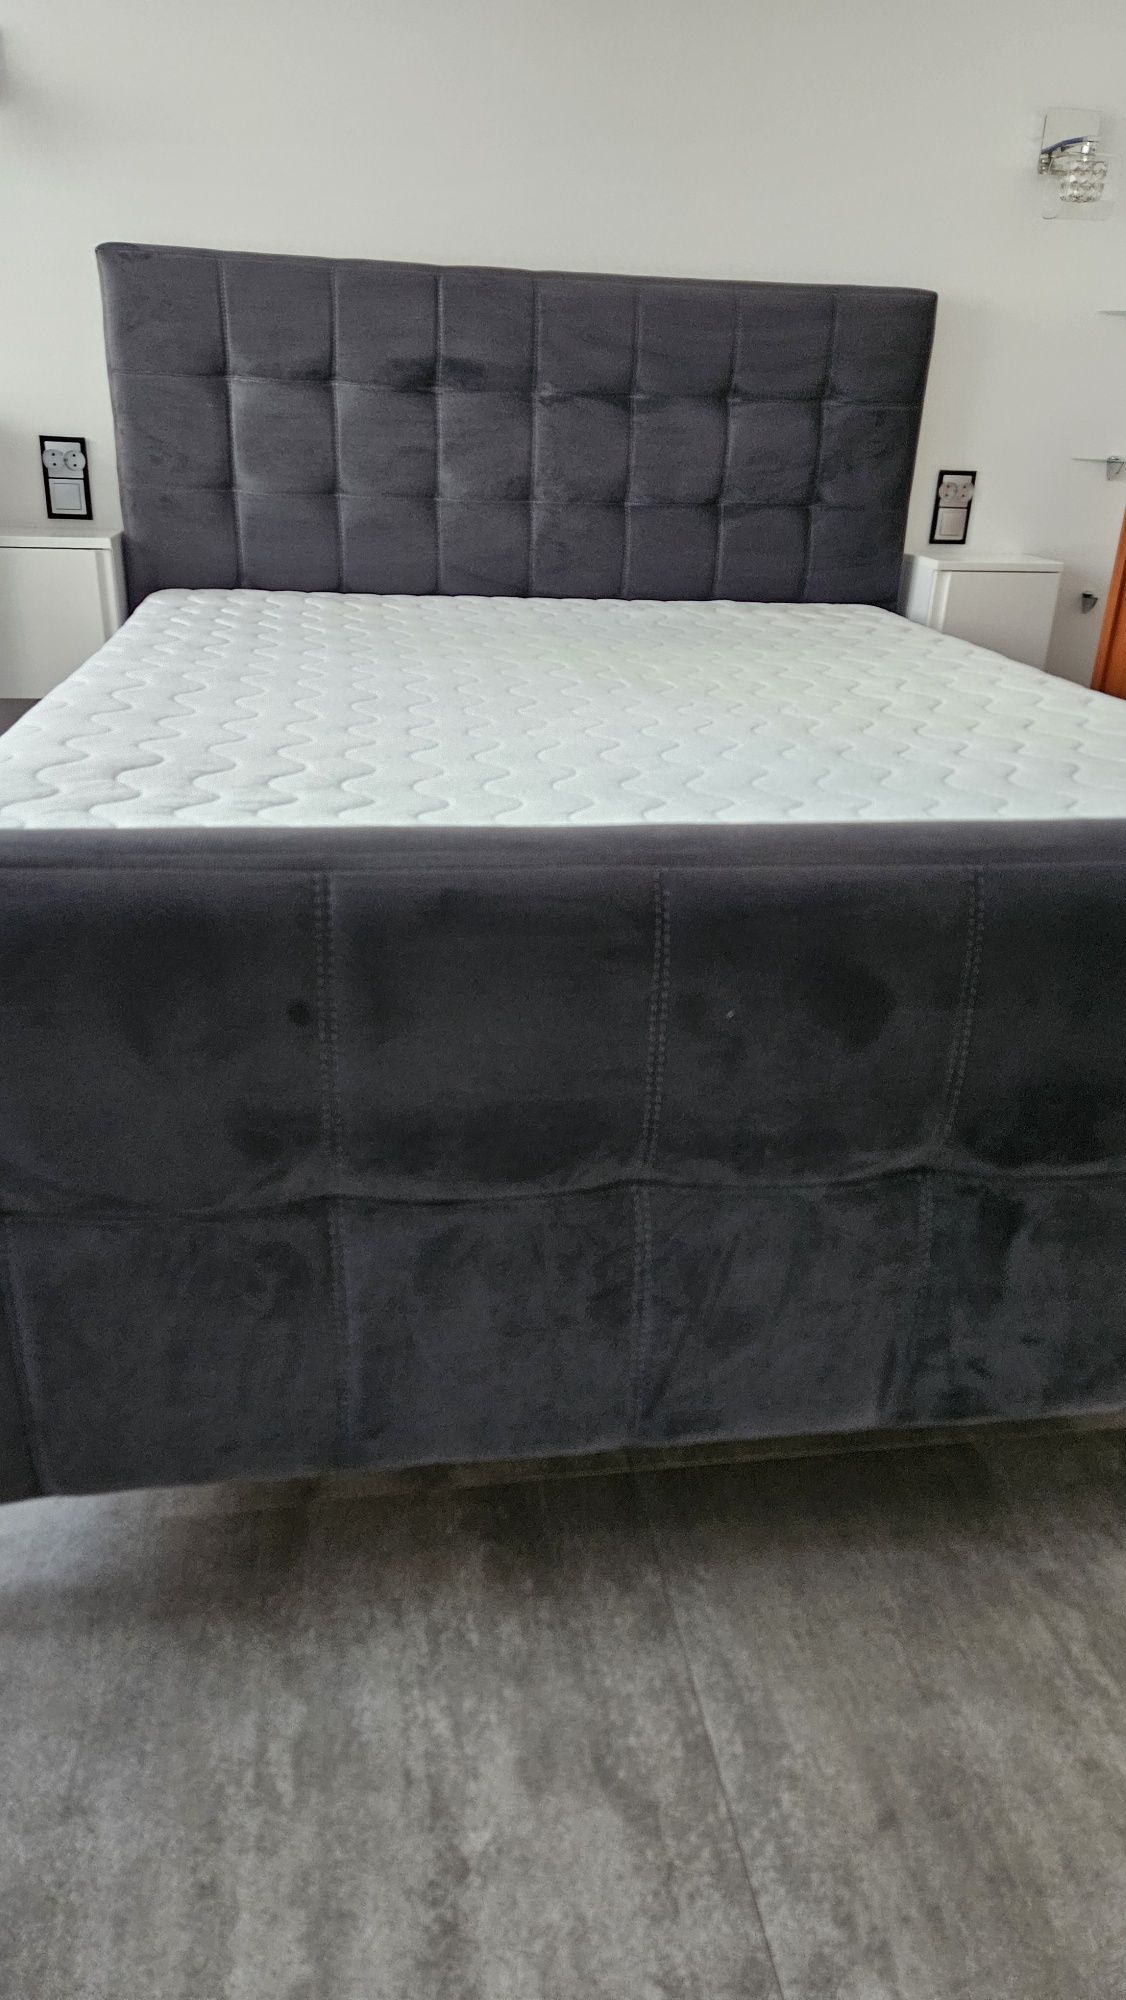 Łóżko z materacem 160x200